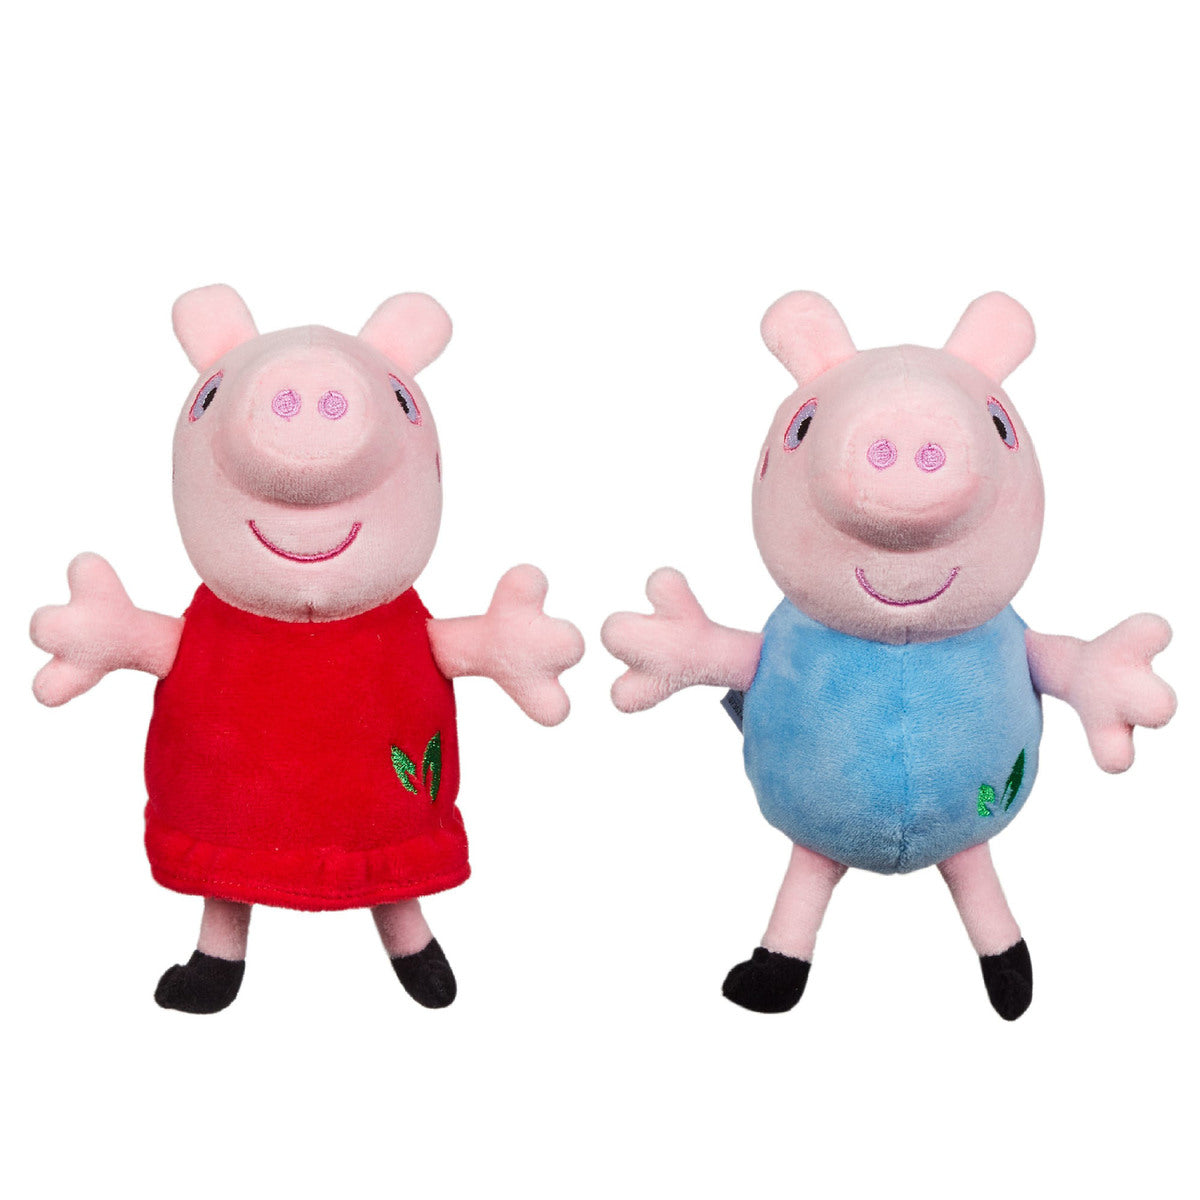 Peppa Pig - Eco Plush (Styles Vary)